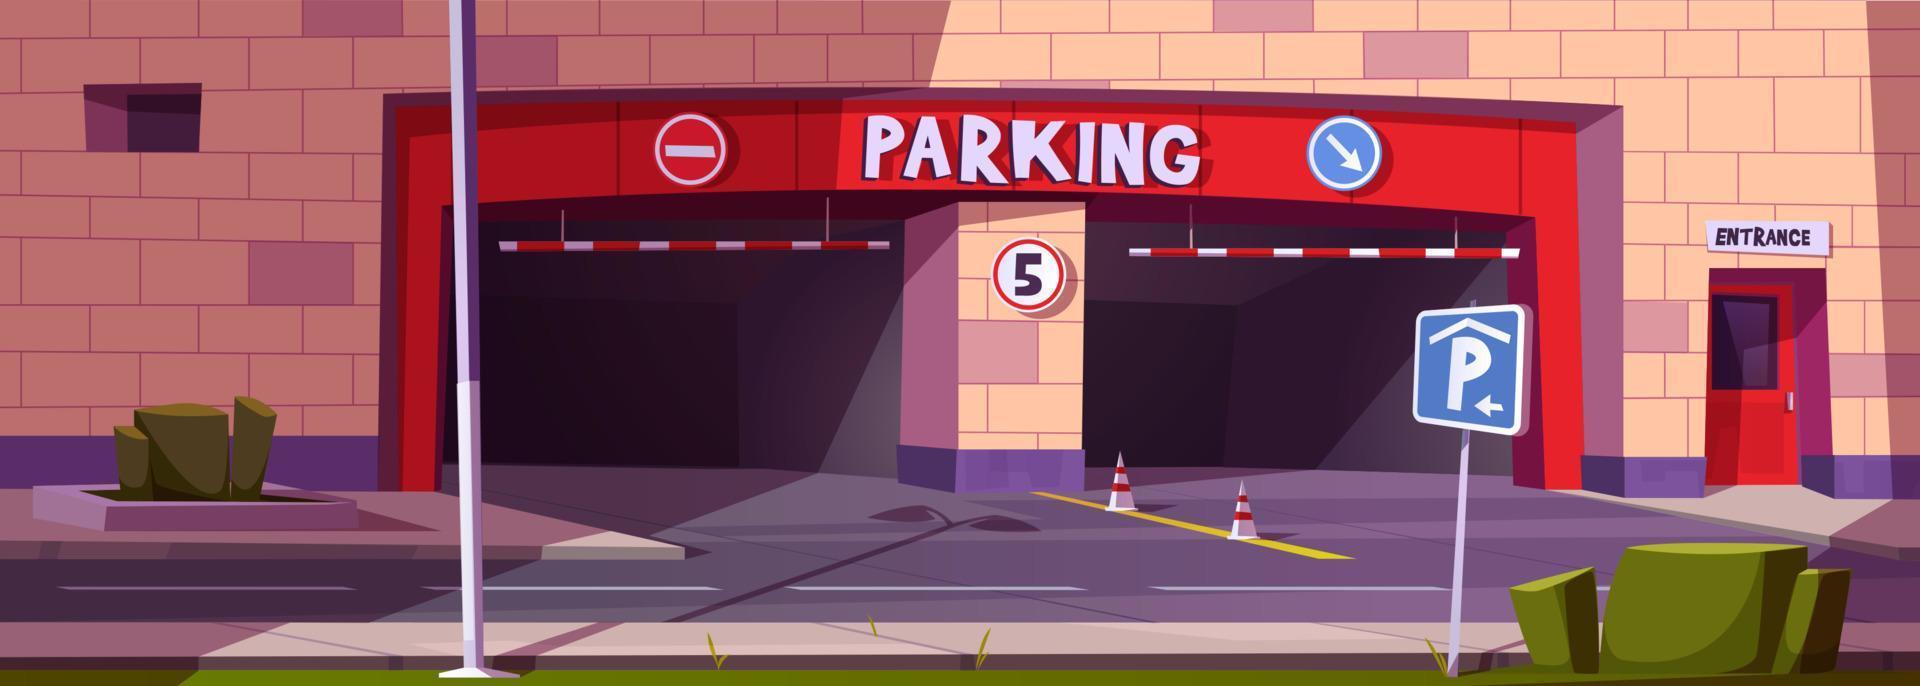 Barrier parking entrance, mall underground facade vector